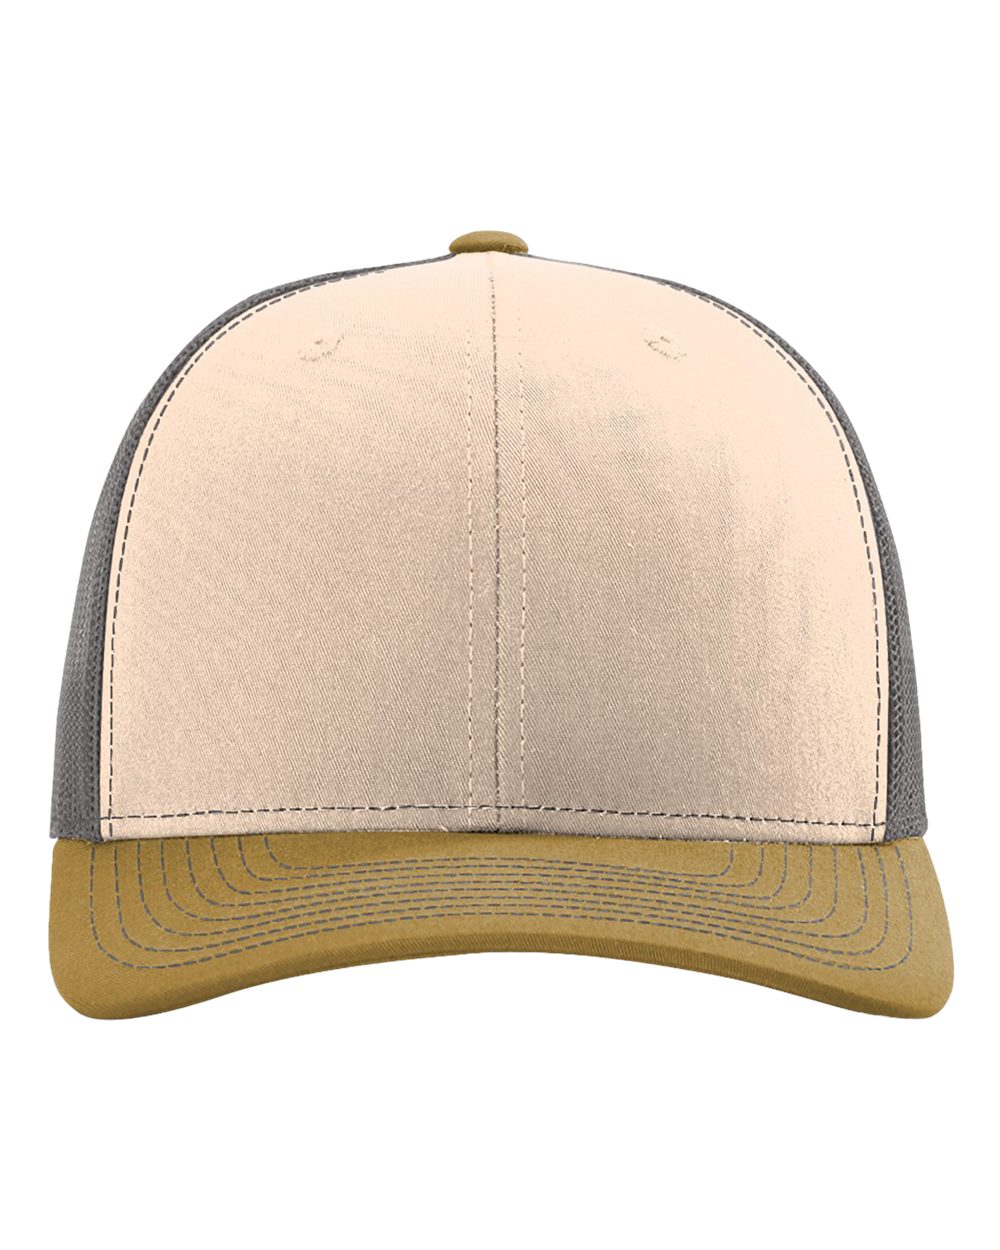 Richardson Snapback Trucker Hat (112) in Mink Beige/Charcoal/Amber Gold